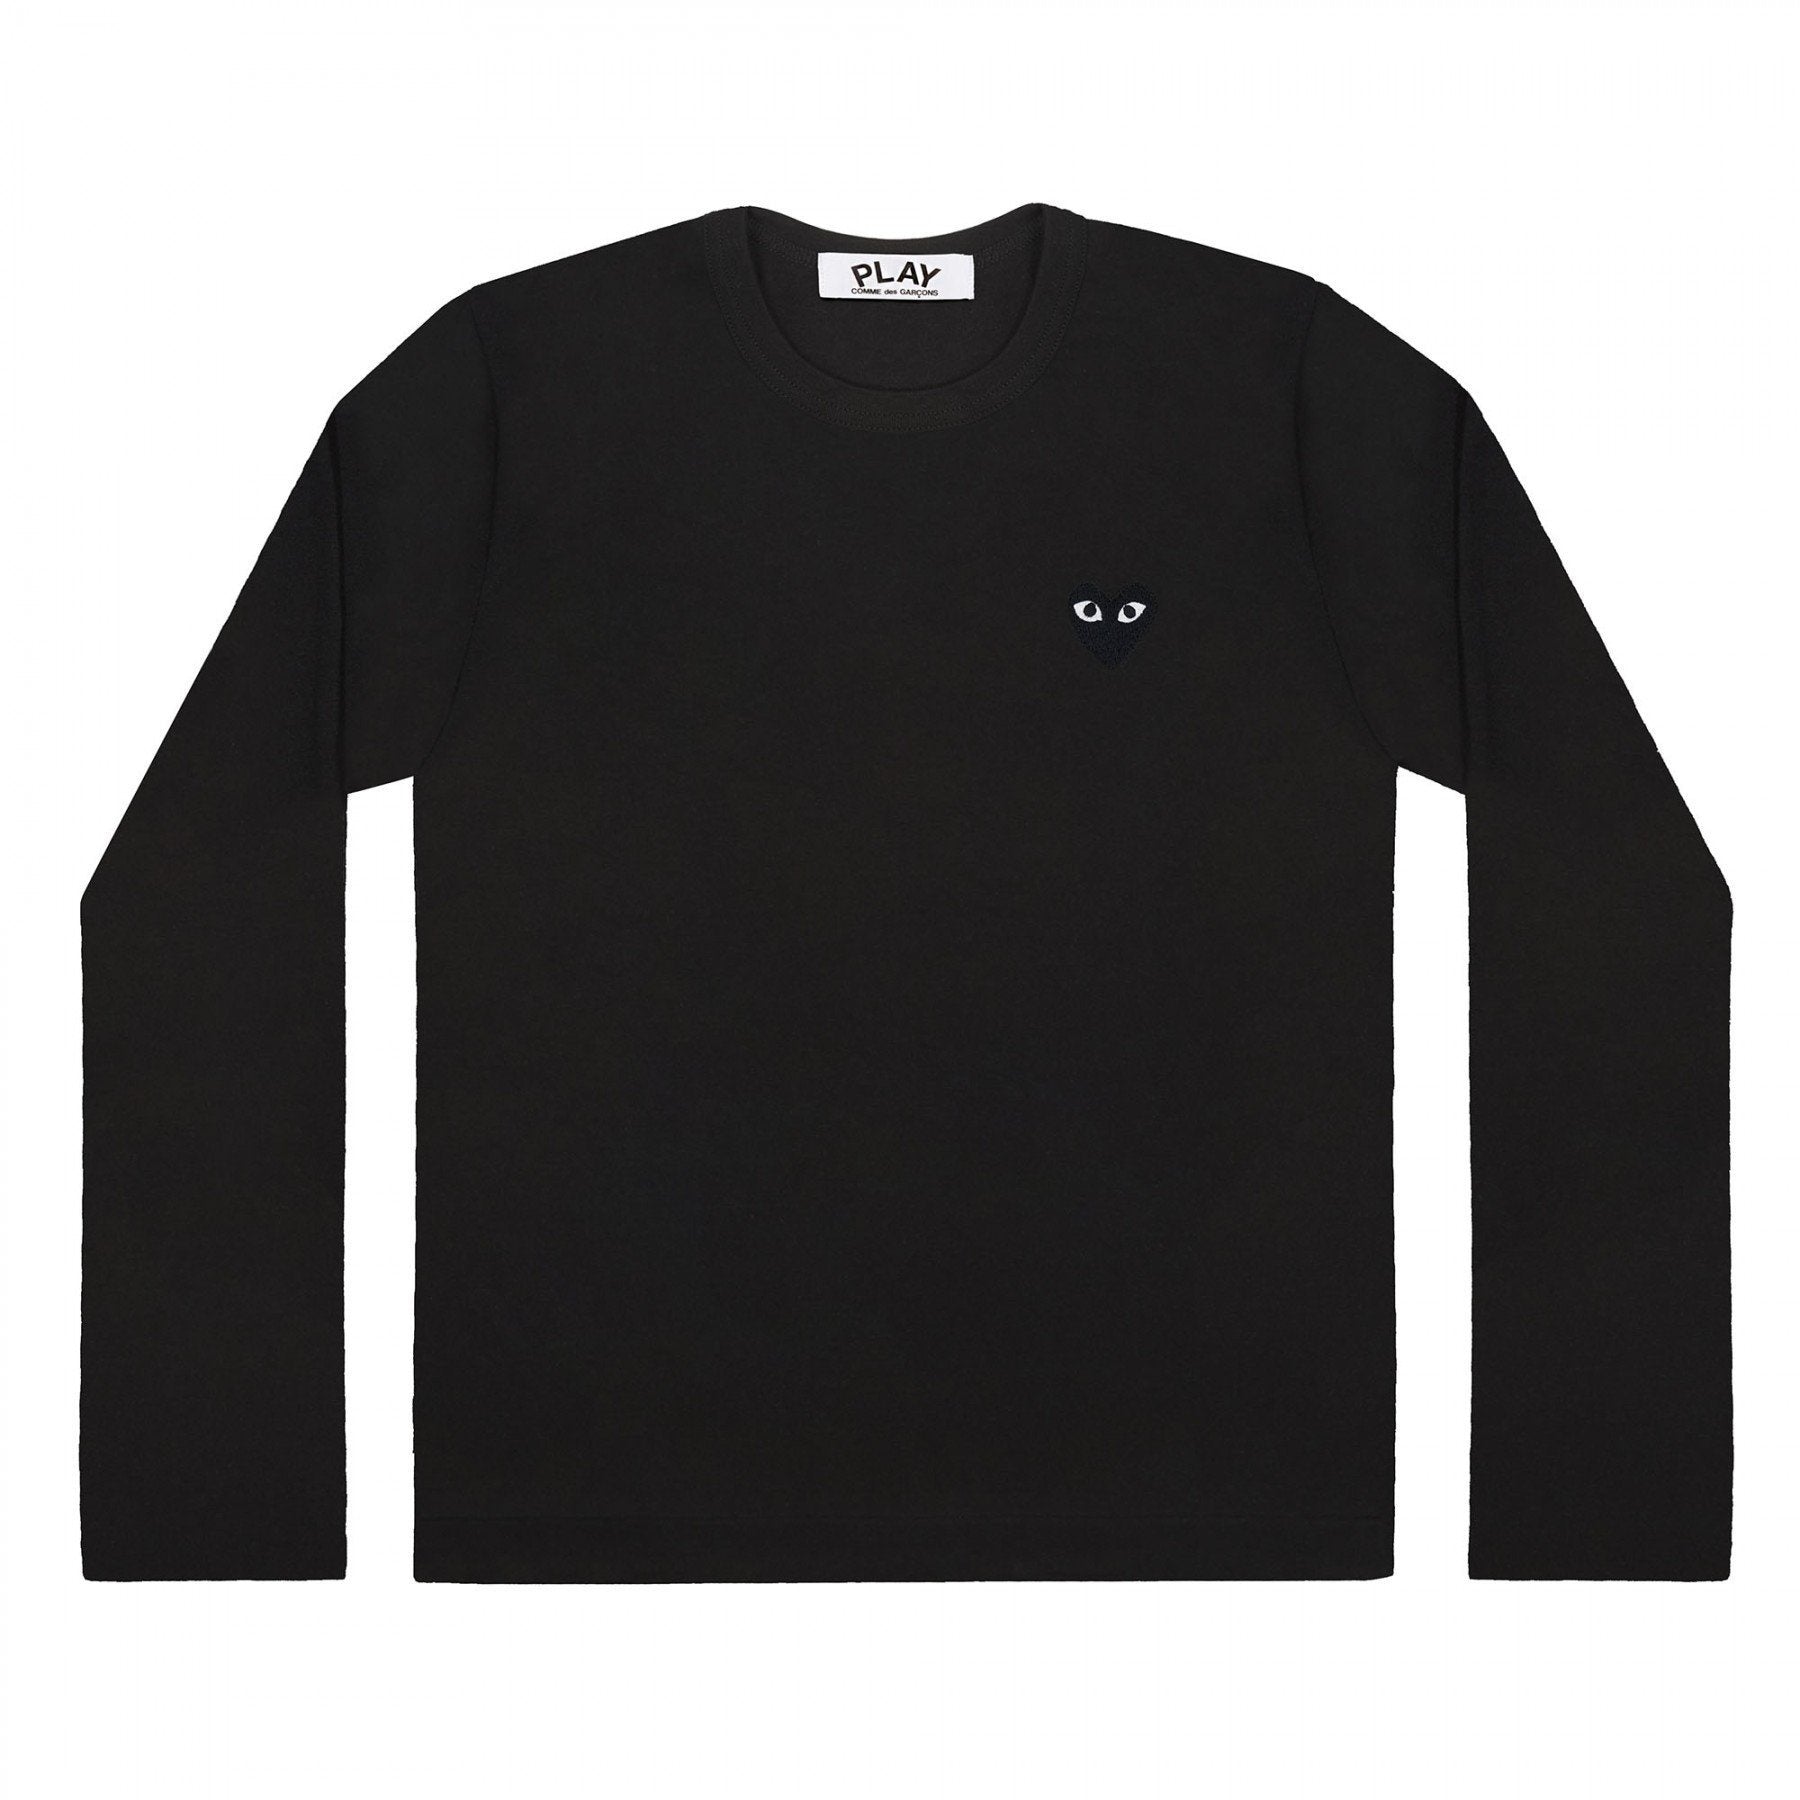 PLAY L/S Basic T-Shirt Black Emblem (Black)